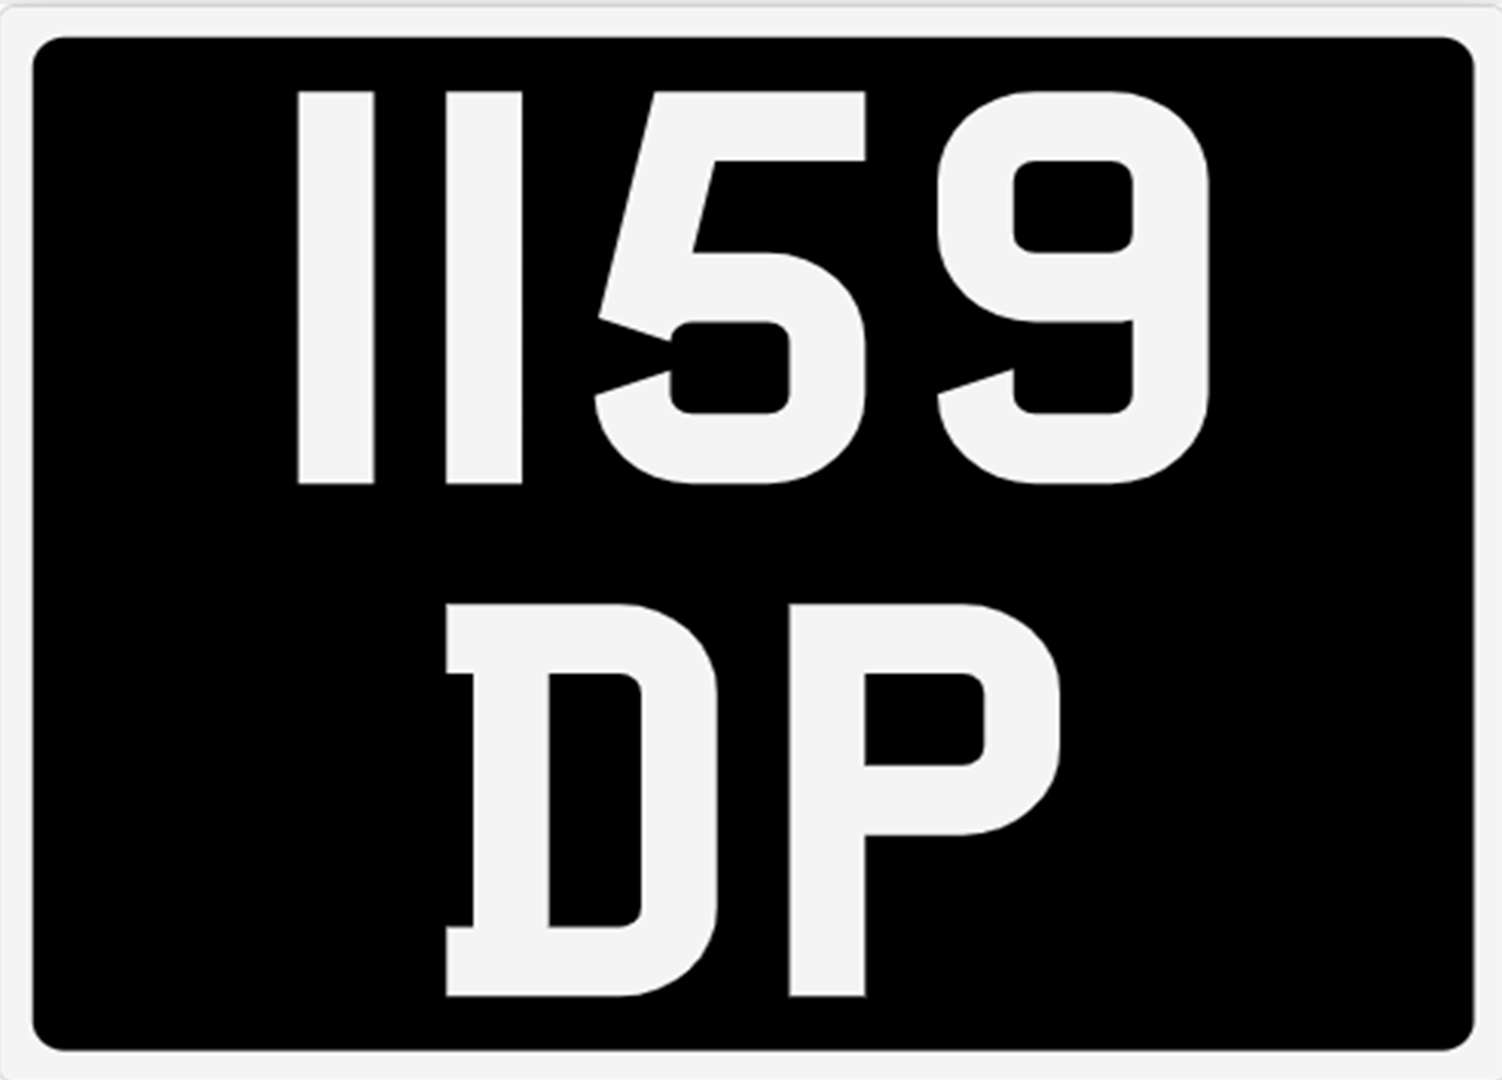 <p>&nbsp; 1159 DP Registration number</p>